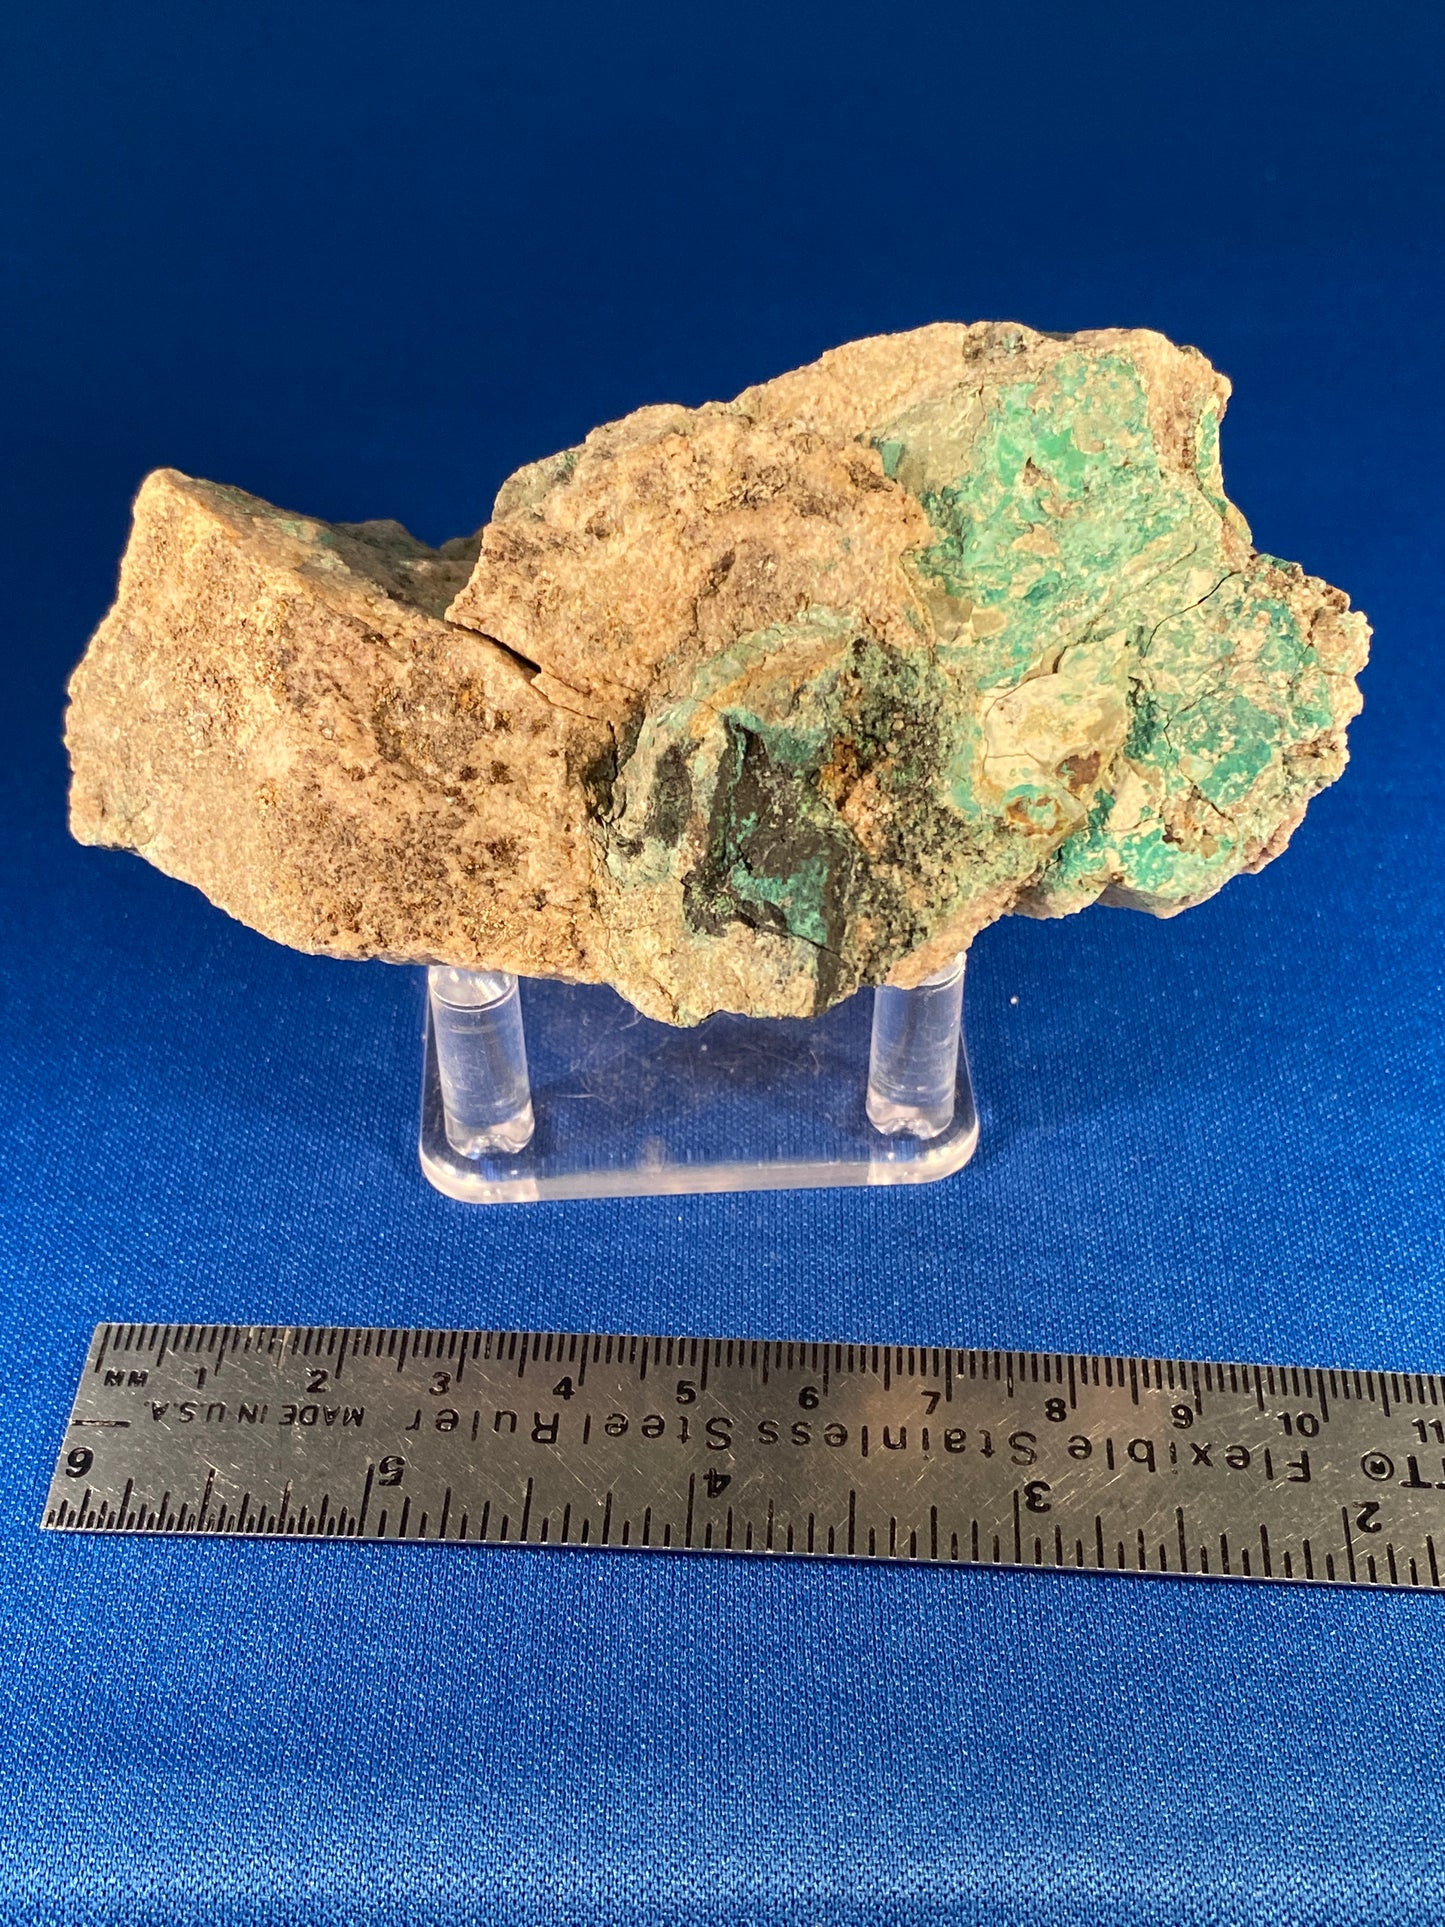 Spionkopite & Yarrowite (rare copper sulphides), Spionkop Ridge, Alberta, Canada